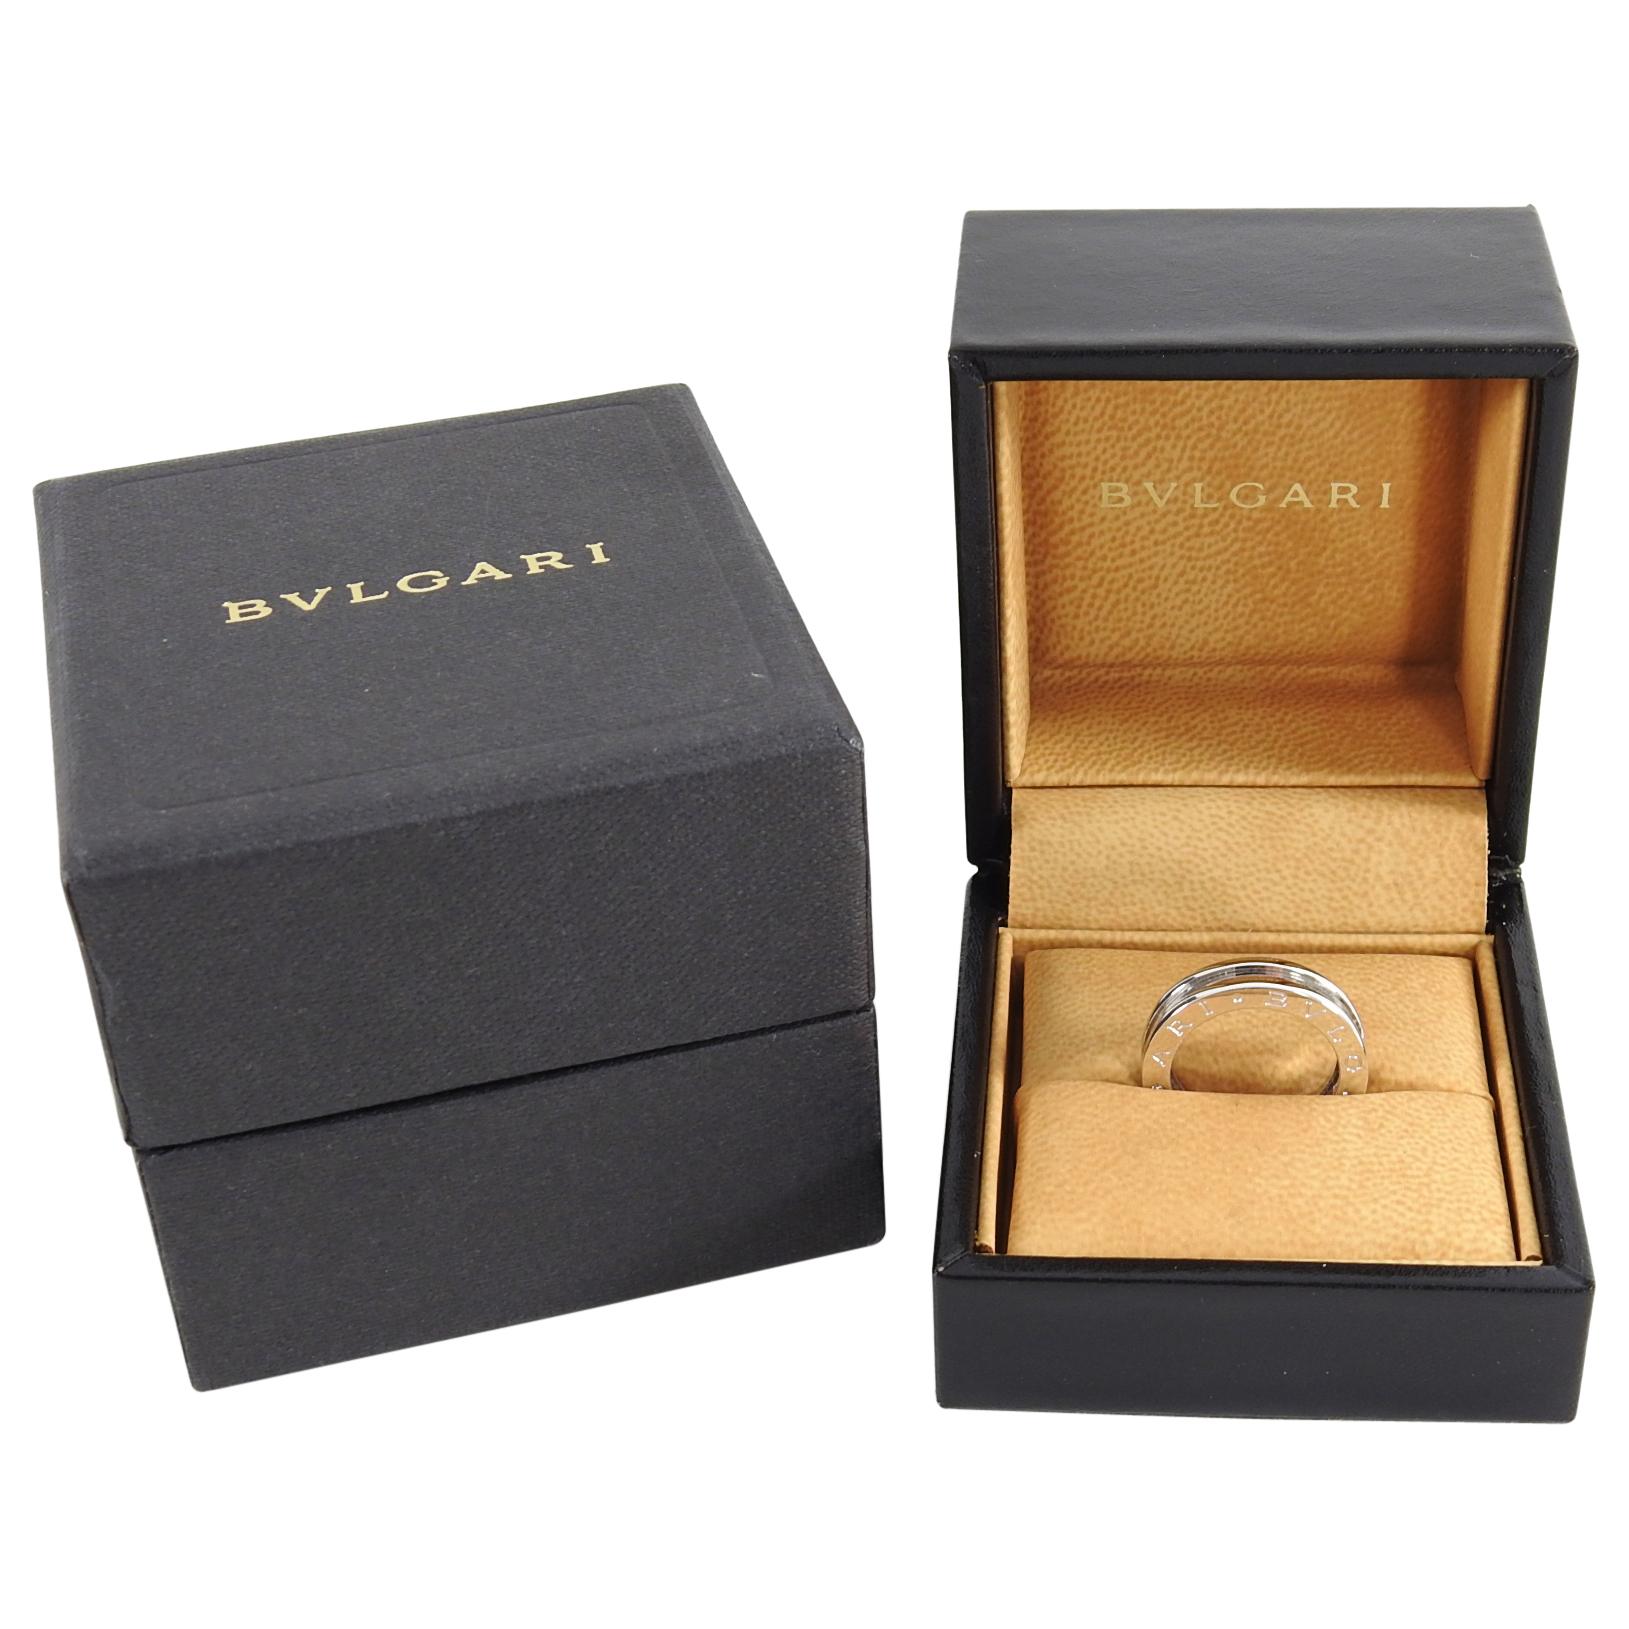 Bulgari B Zero One 18K White Gold Single Band Ring.  Original retail $1550 USD / $2075 CAD.  Single band ring in 18k white gold.  Includes original box.  Ring size 51 (USA 5-3/4).  As new condition.